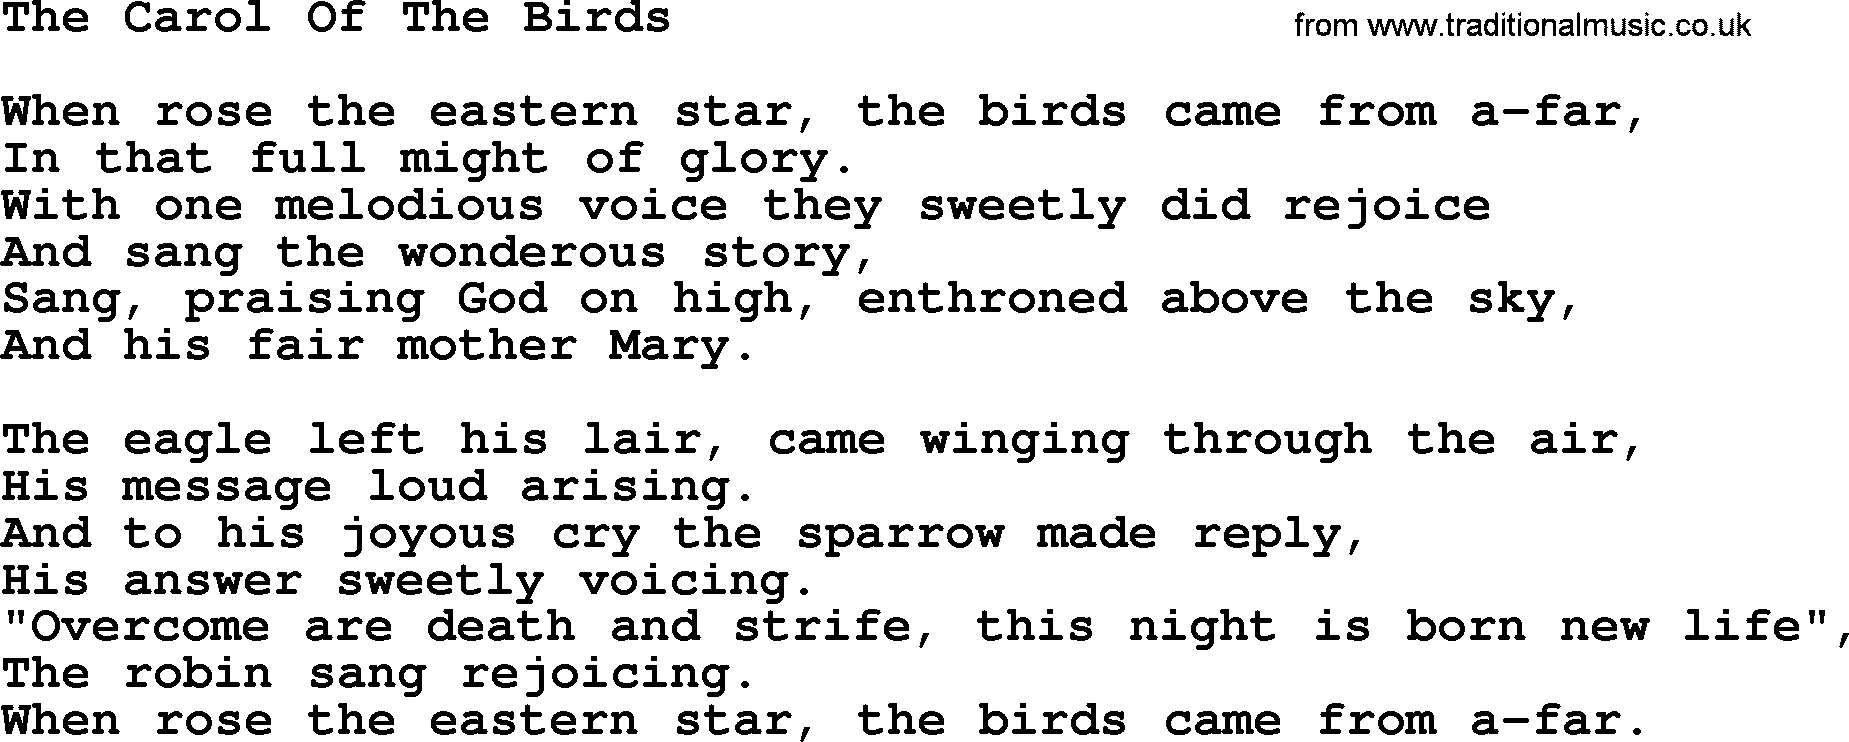 Joan Baez song The Carol Of The Birds, lyrics